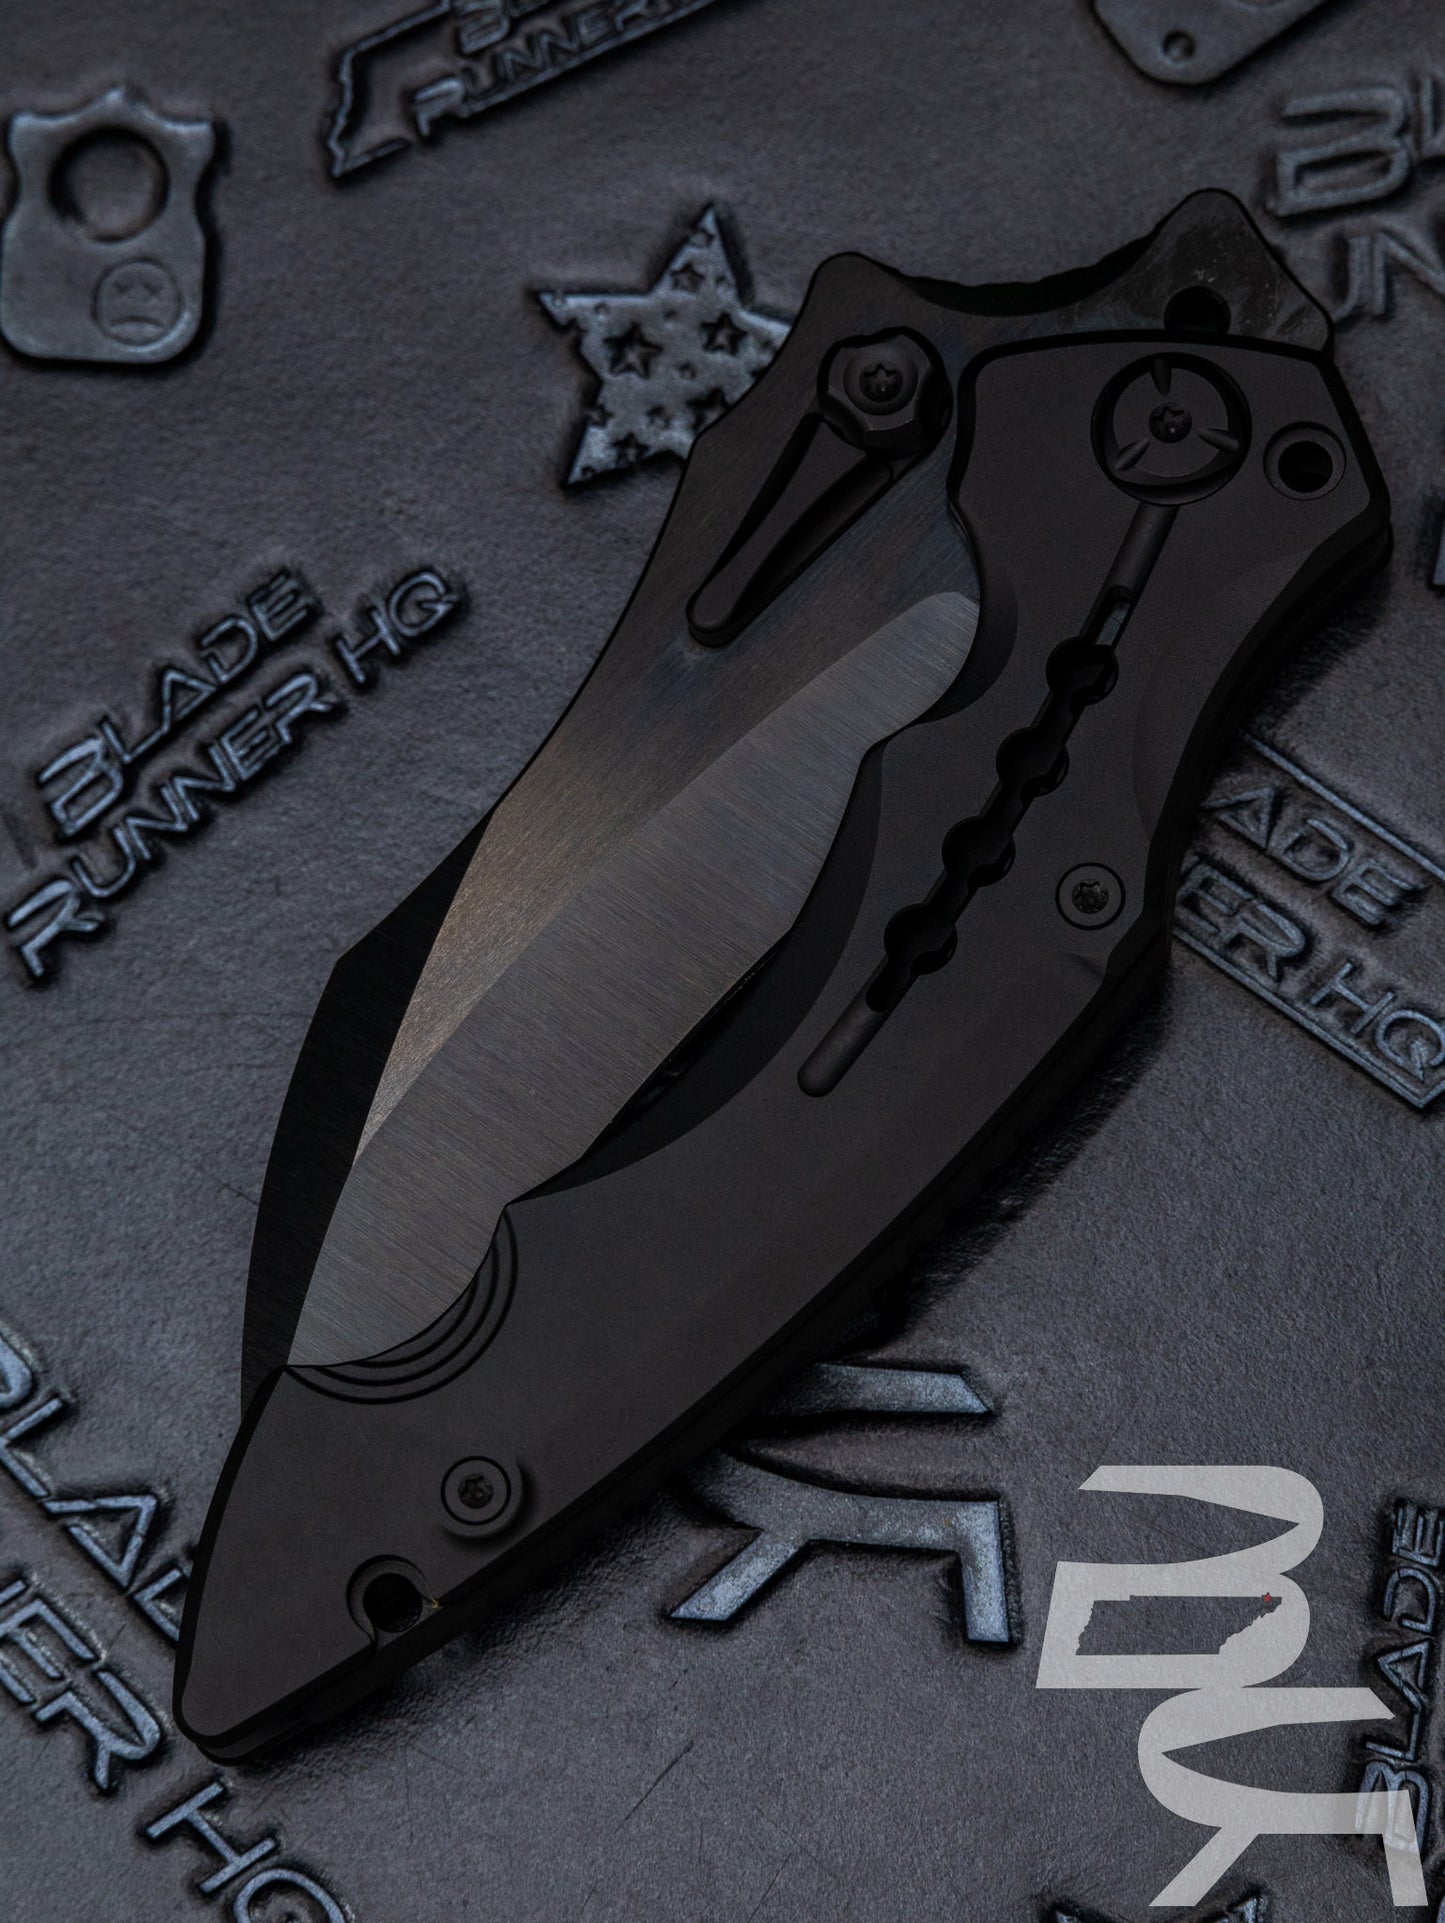 MAXACE HELA FOLDING SCYTHE POCKET KNIFE BLACK TITANIUM HANDLE M390 DLC SATIN BLADE M20B